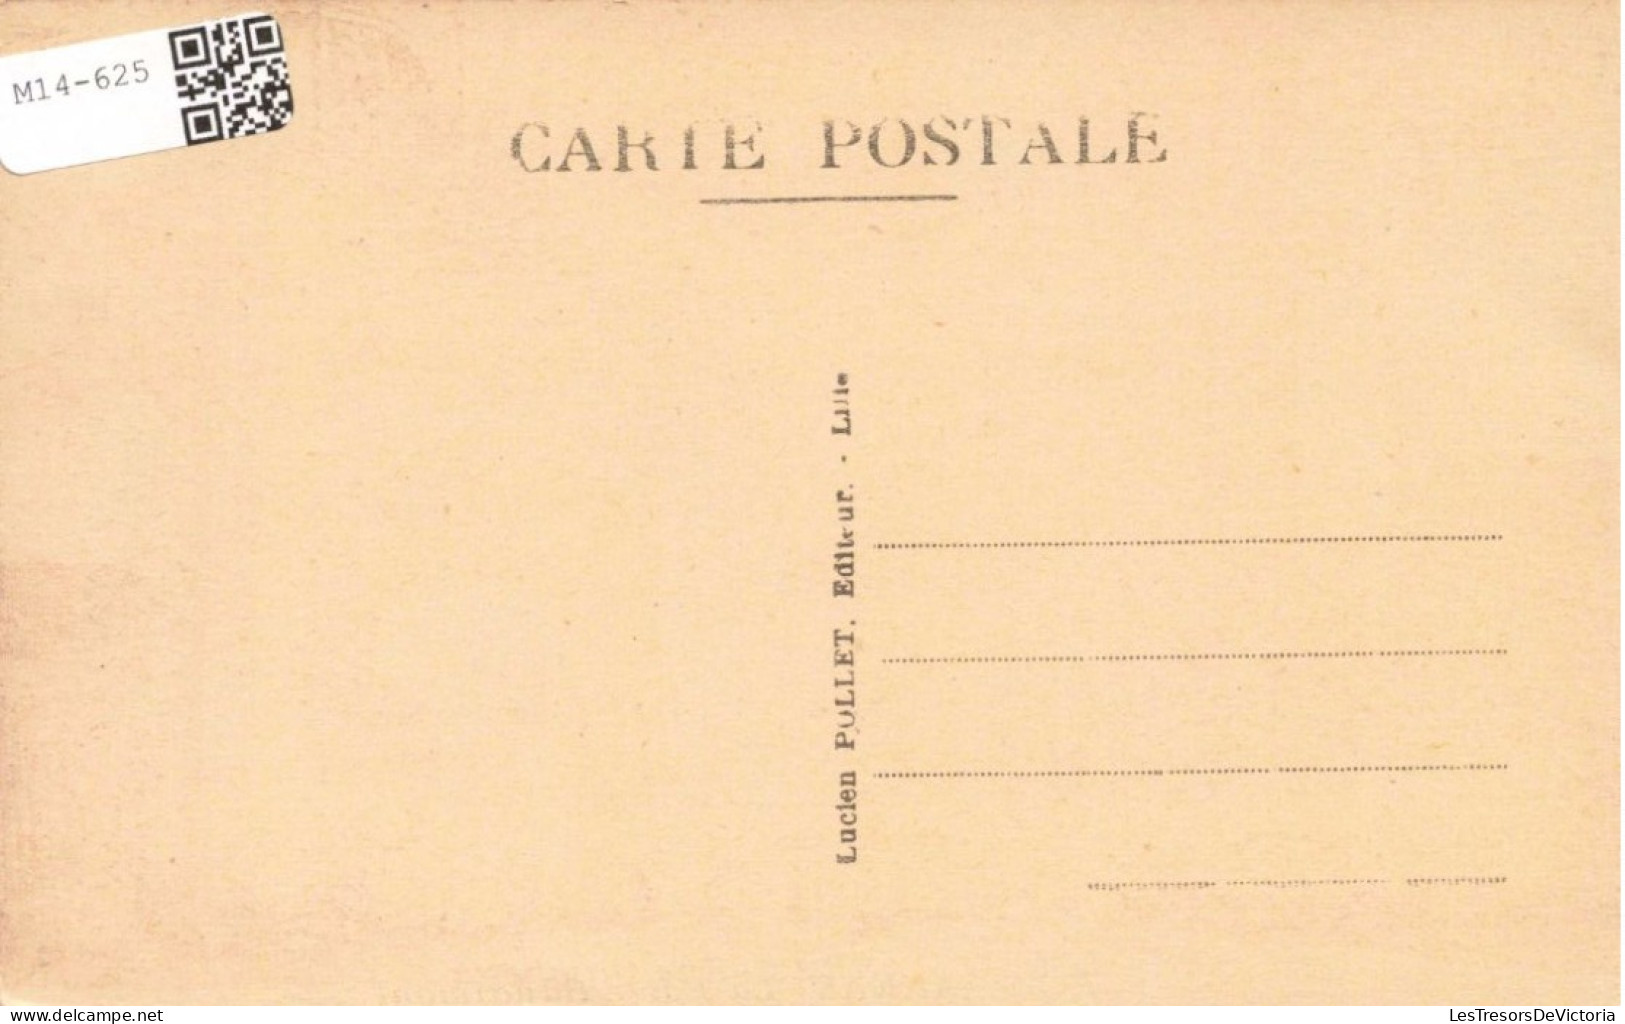 FRANCE - Arras - Rue Gambetta - Carte Postale Ancienne - Arras